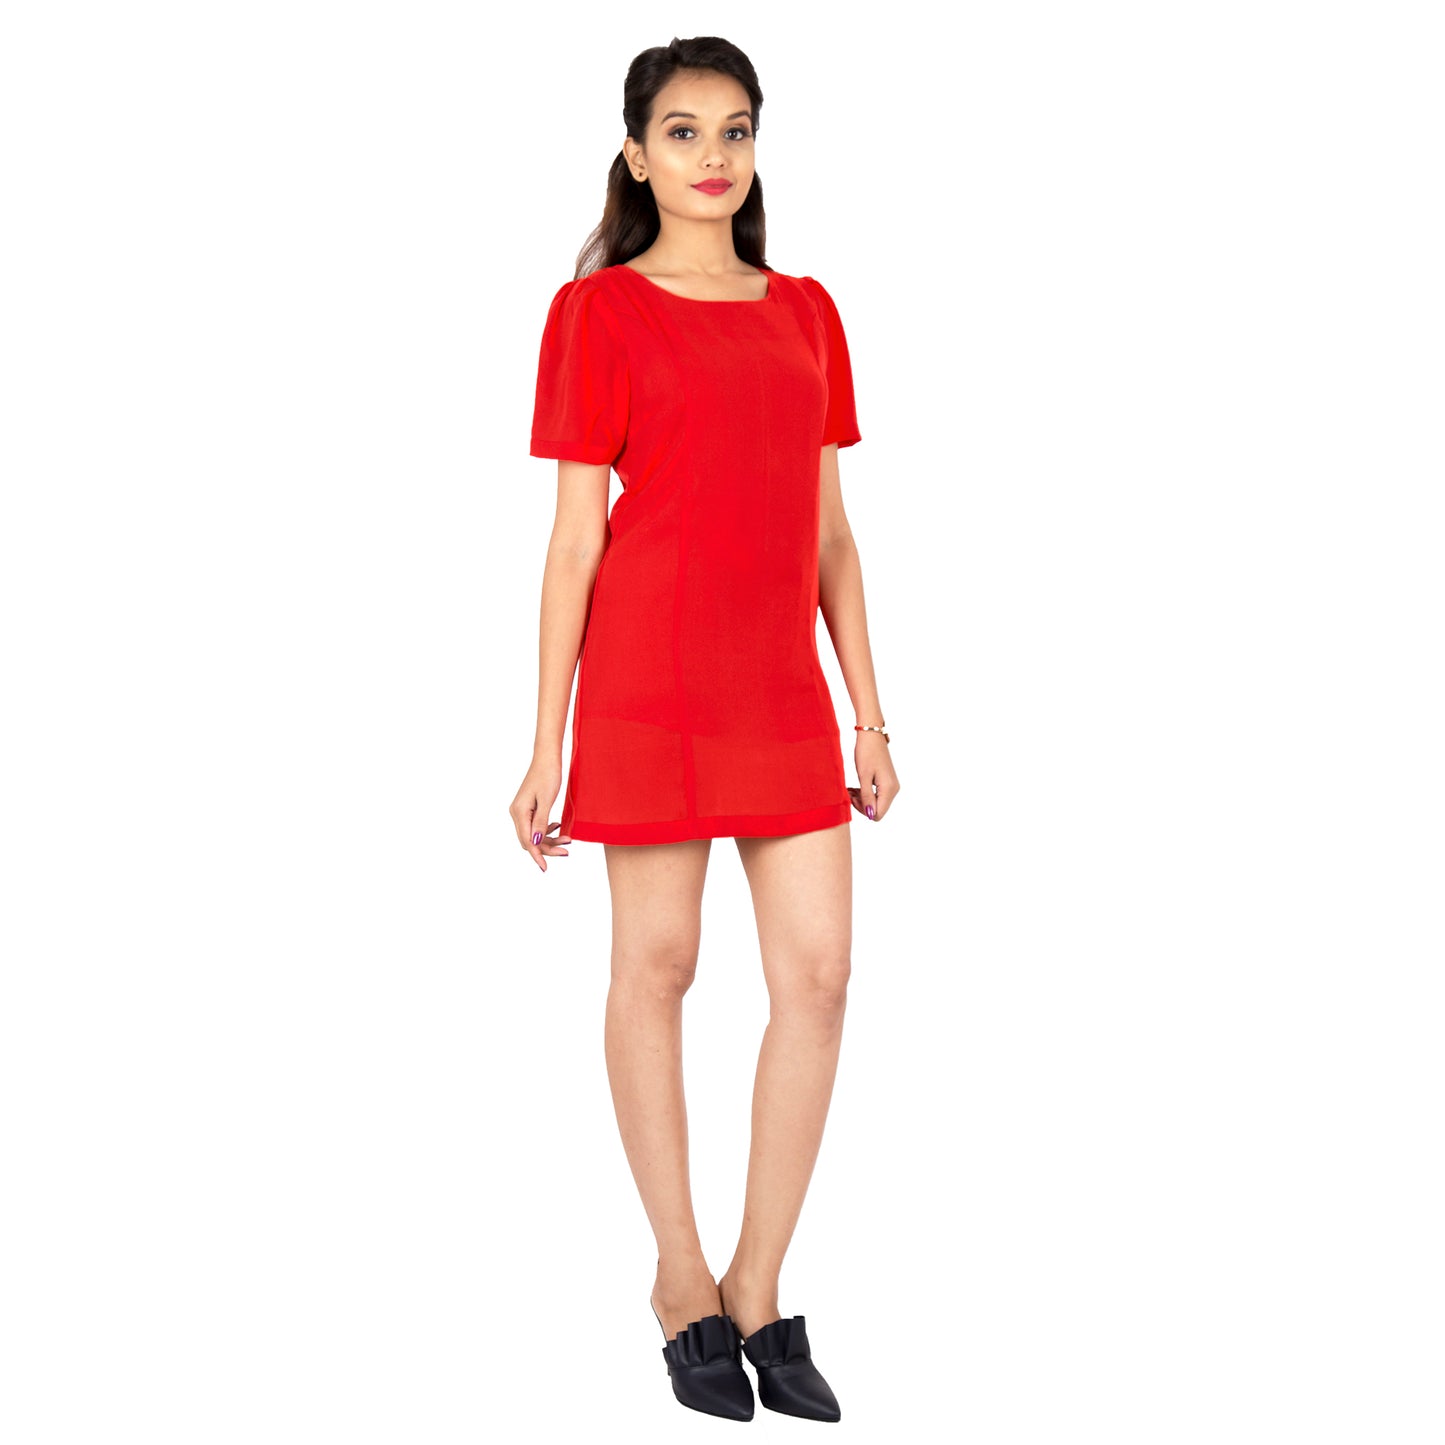 women's-plain-red-dress-online-india